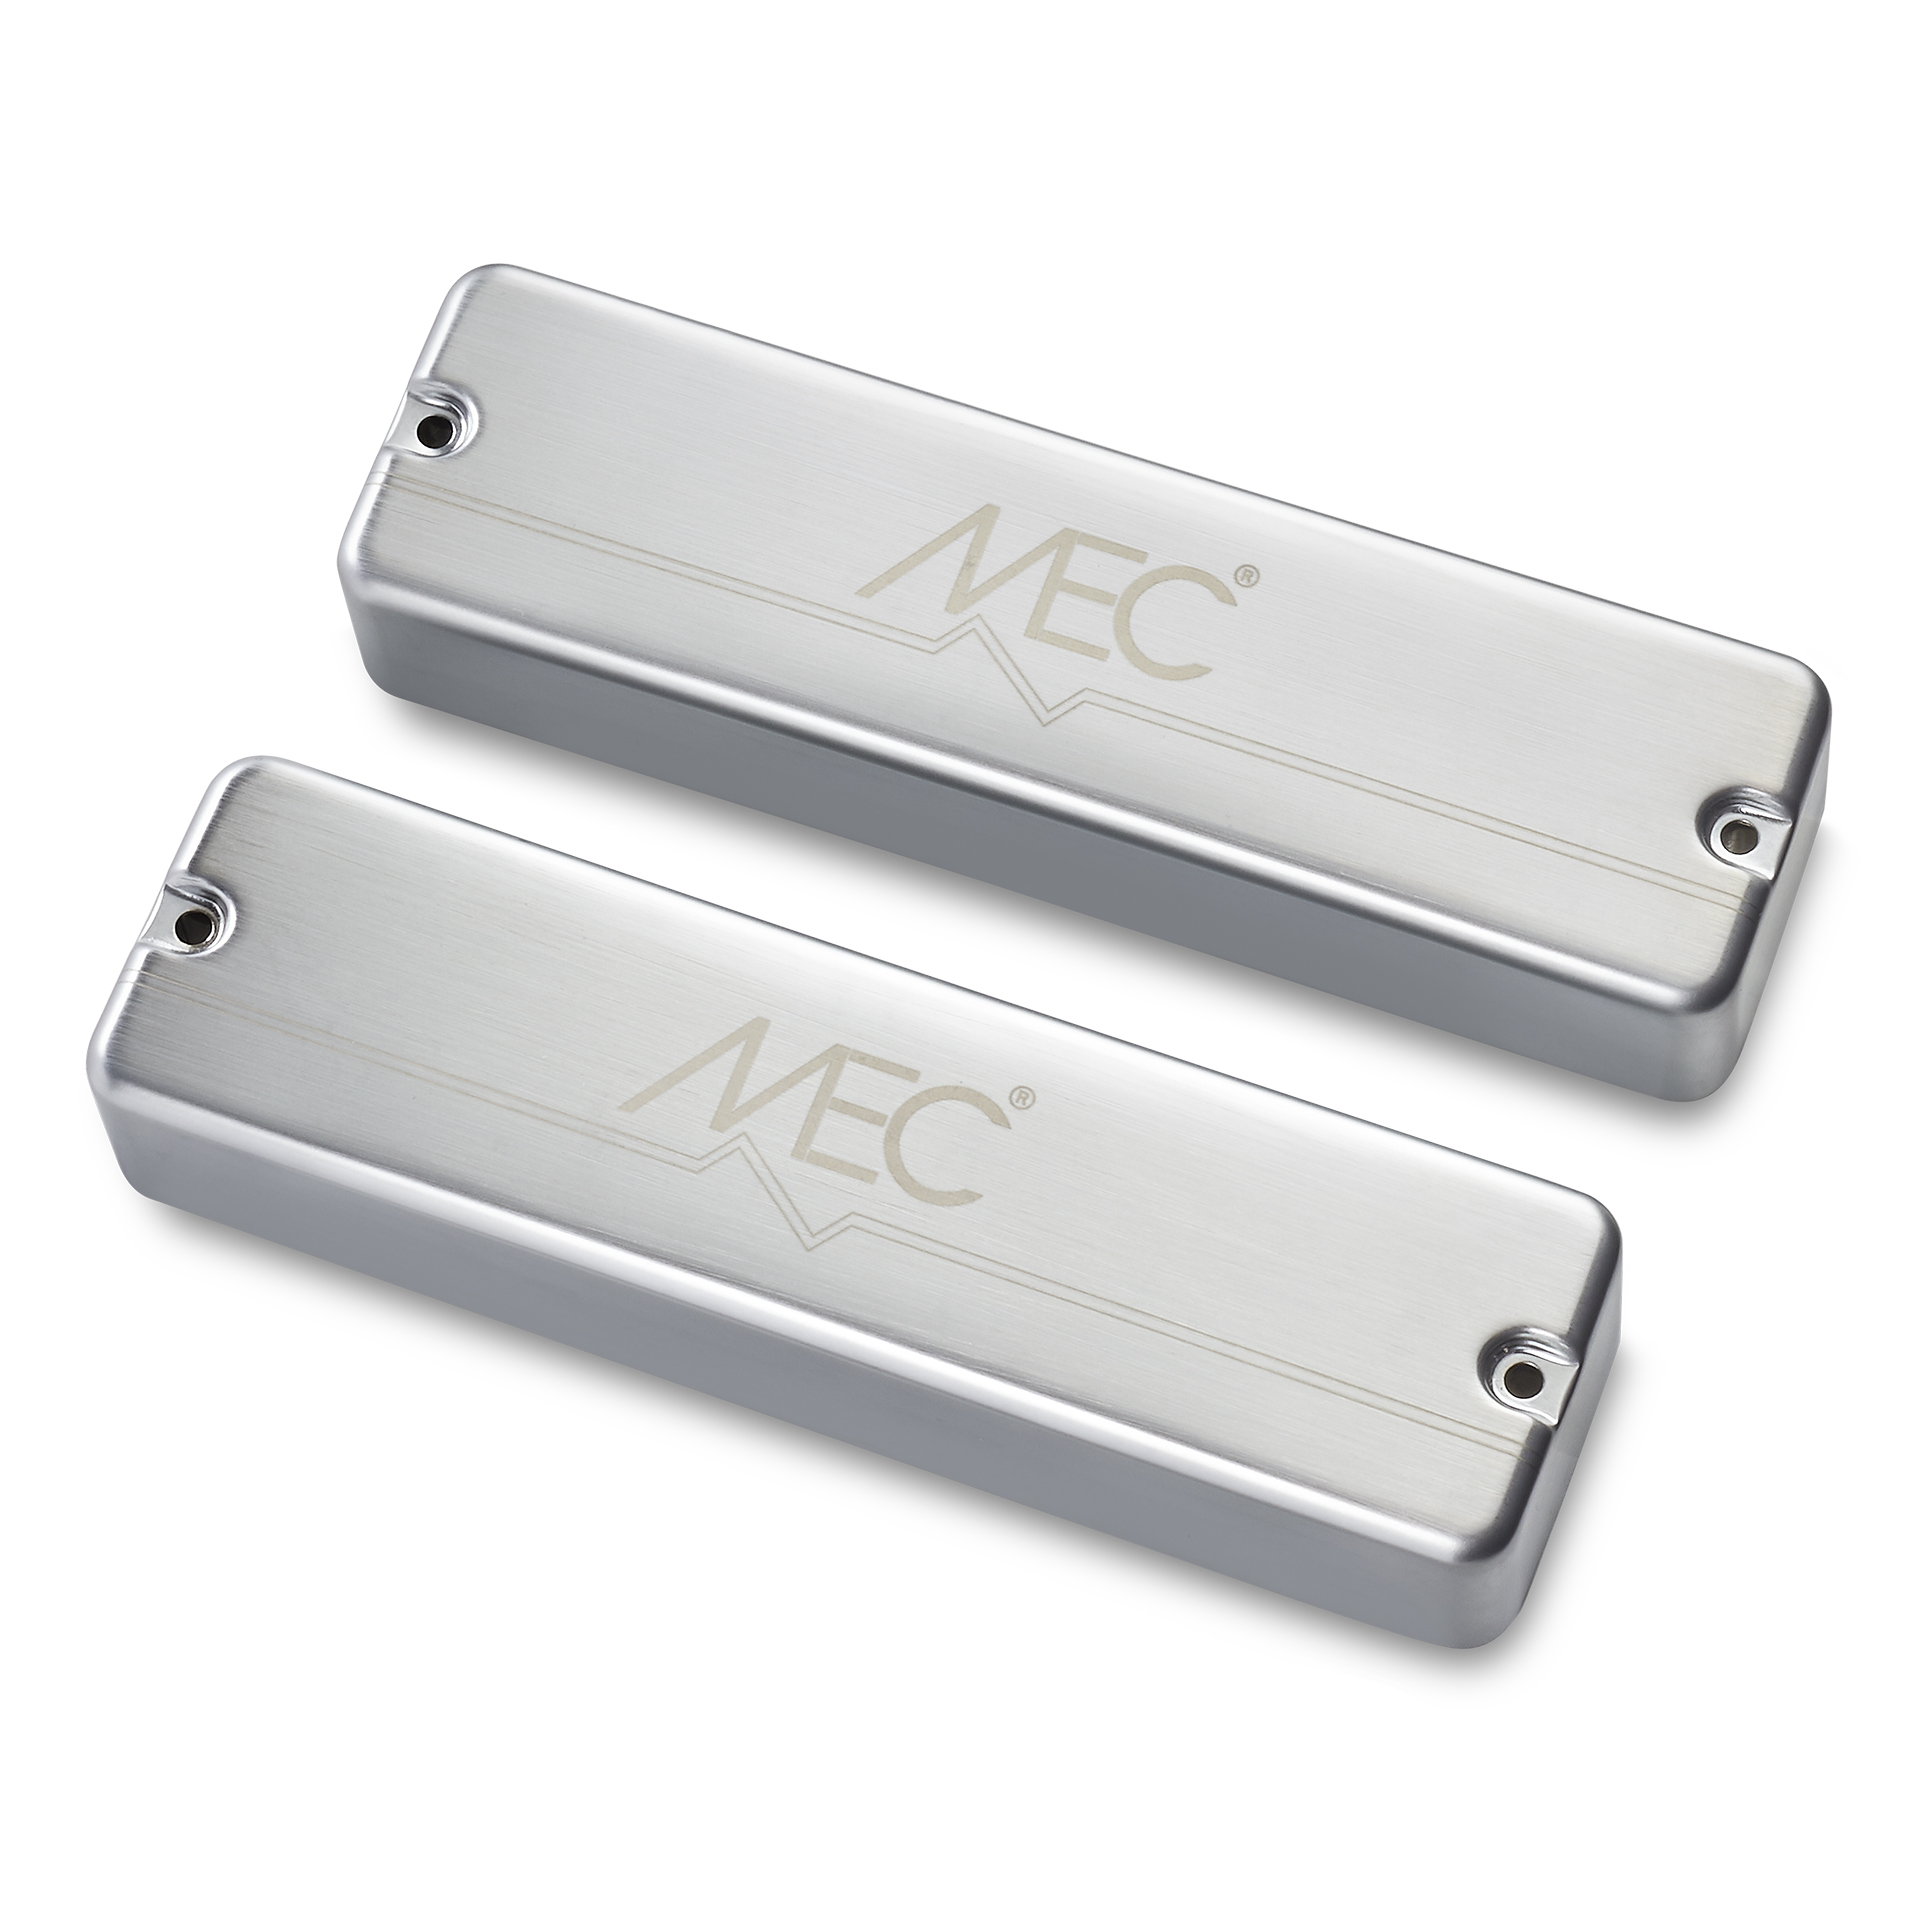 MEC Active Soapbar Humbucker Bass Pickup Set, Metal Cover, 6-String - Brushed Chrome